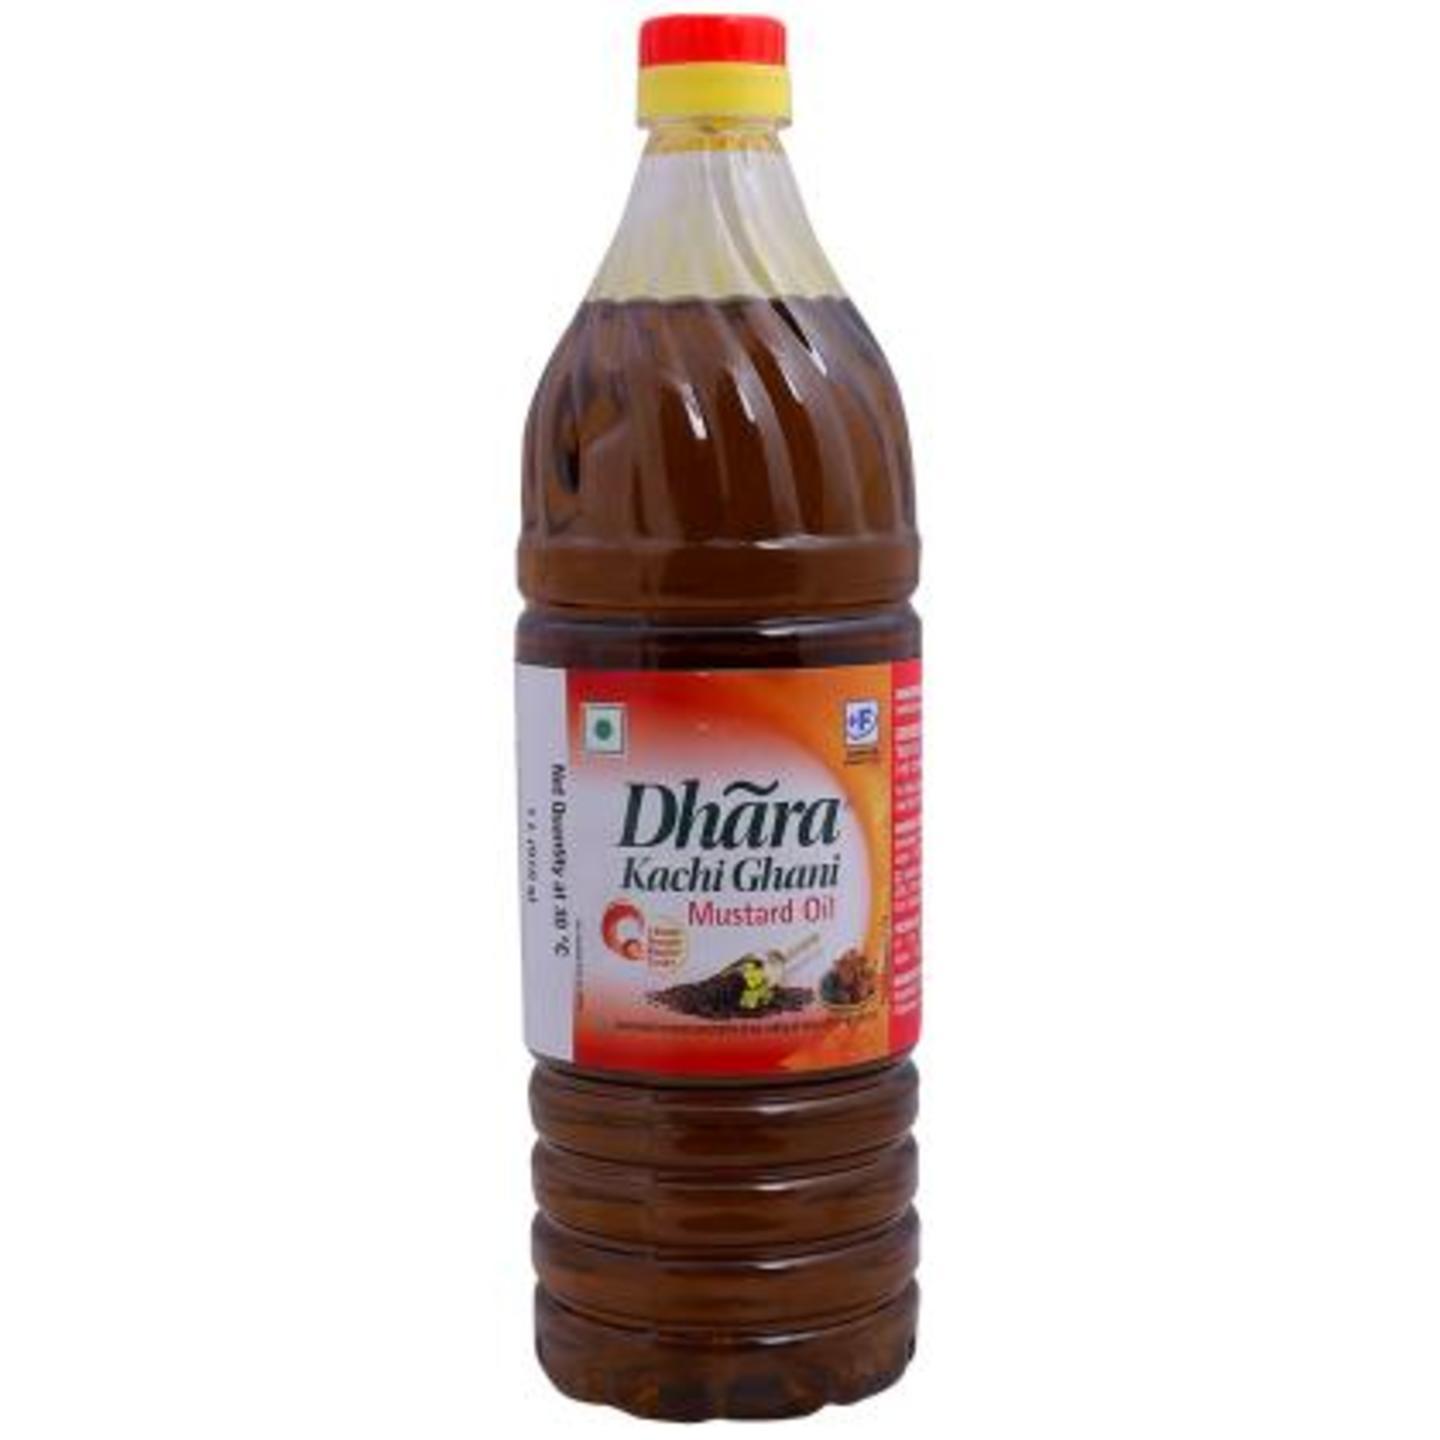 Dhara Kachi Ghani Mustard Oil 1 L PMBM 0.0657.8